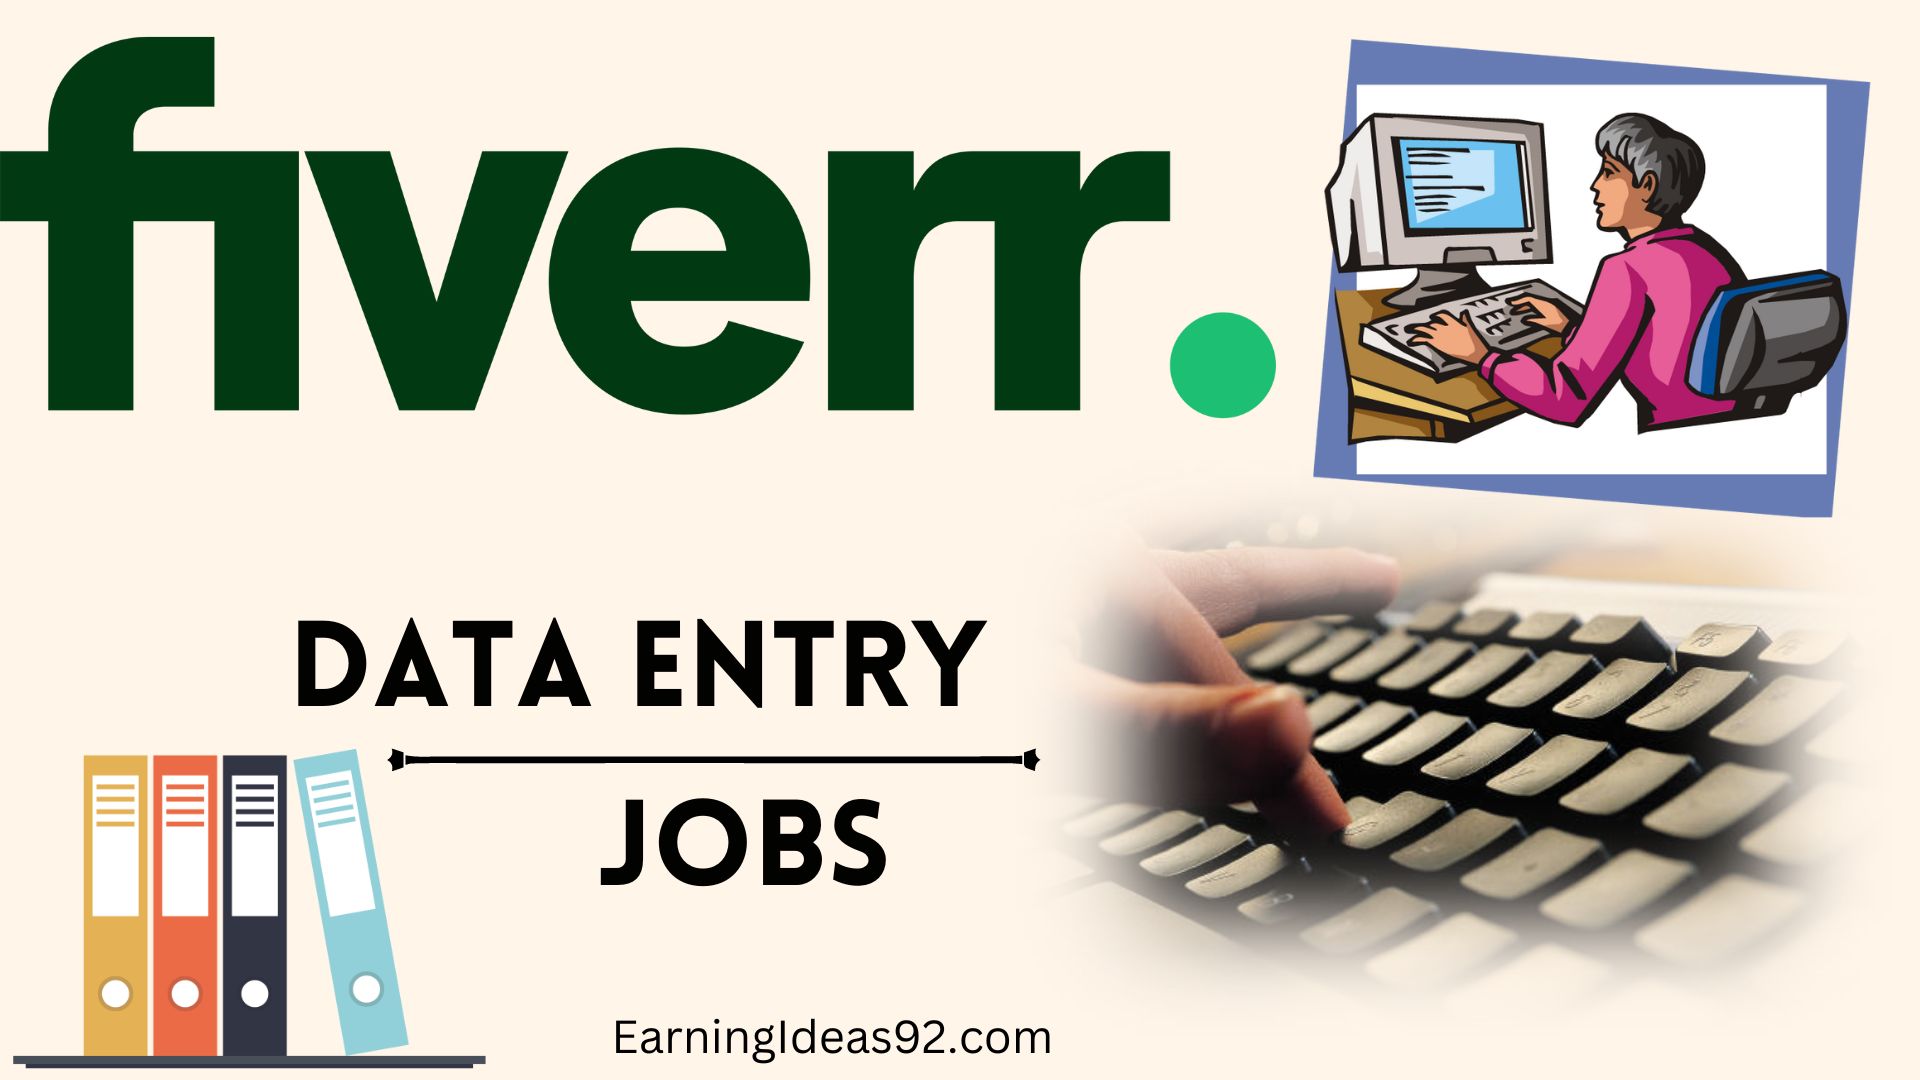 fiverr data entry jobs